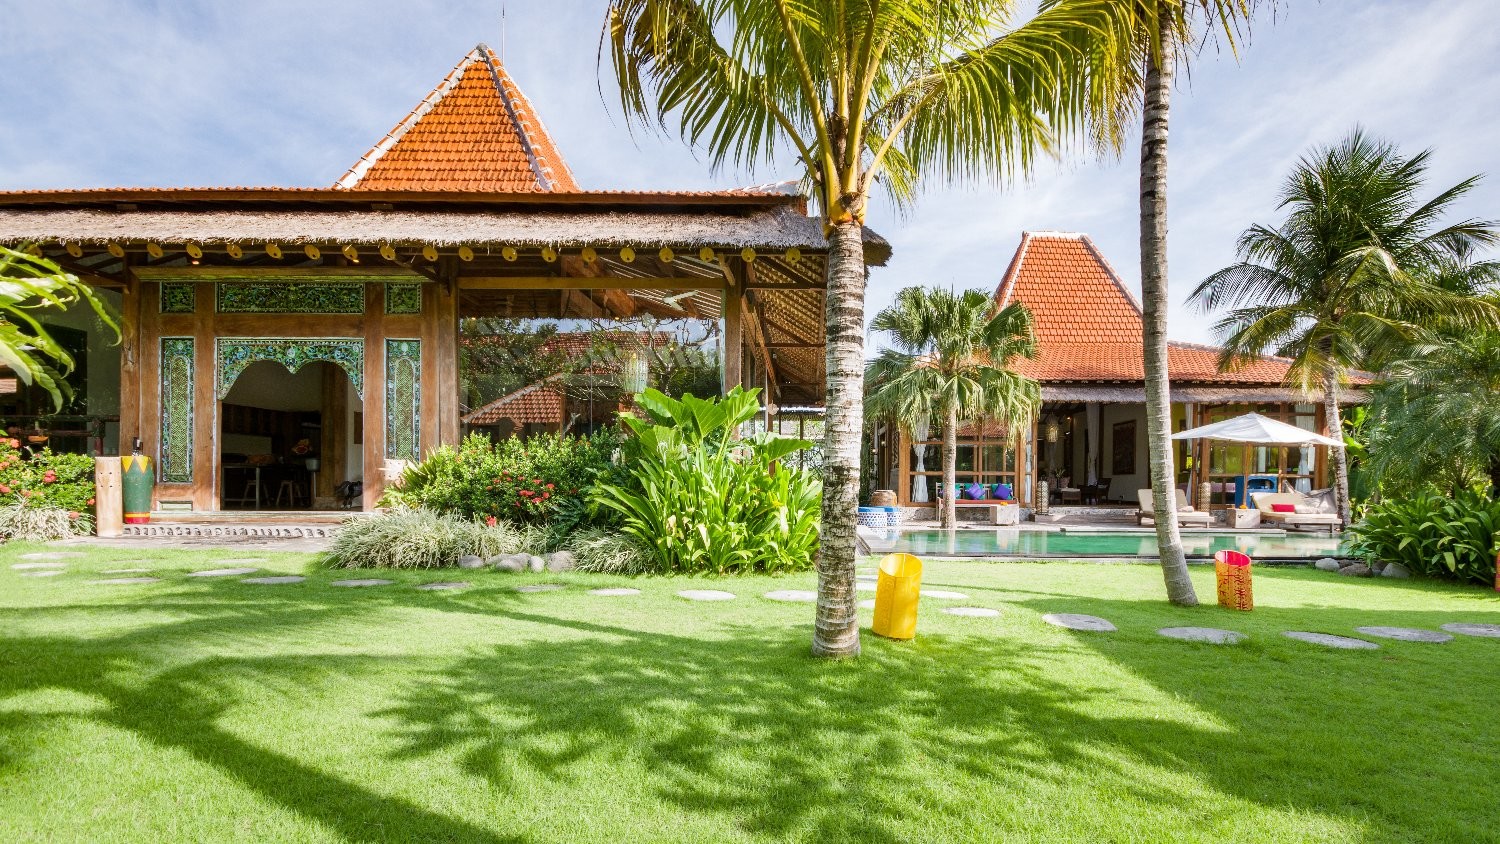 The front of Villa Desa Roro, one of the bests canggu beach villas in Bali